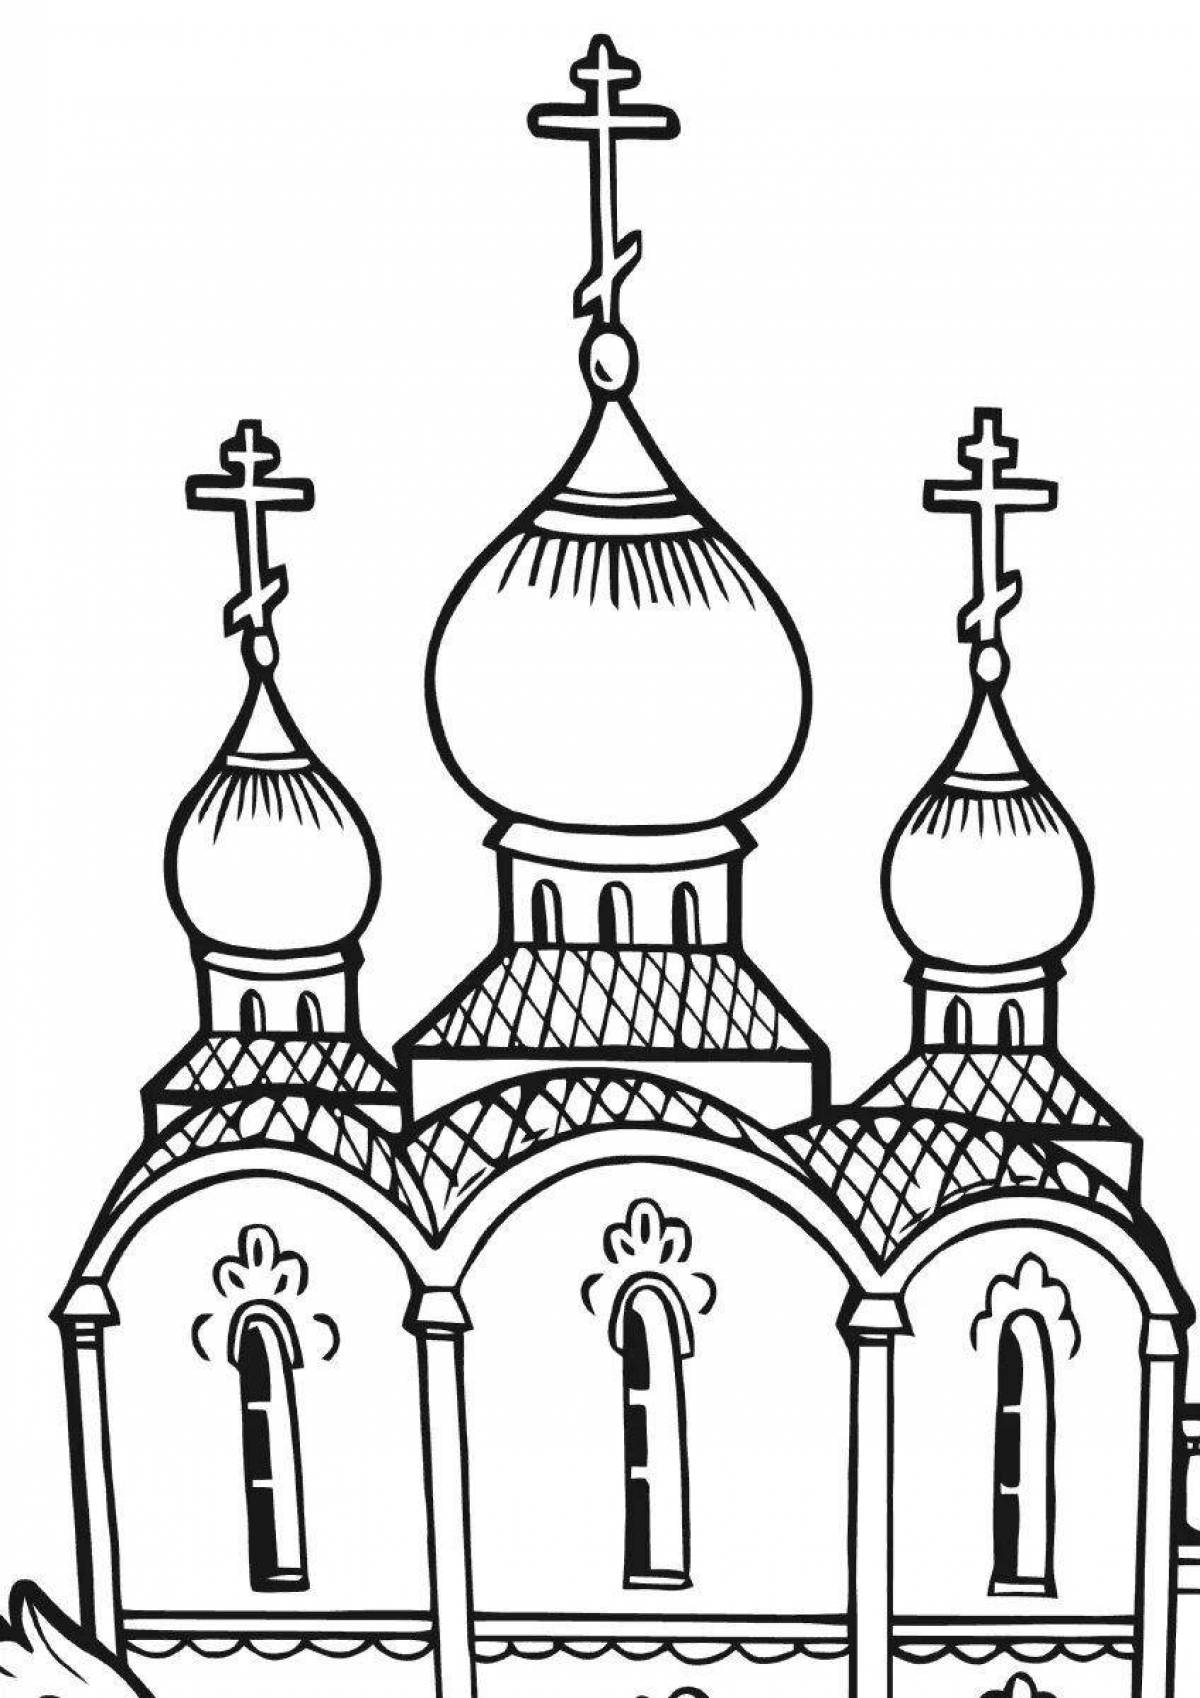 Royal orthodox church coloring page